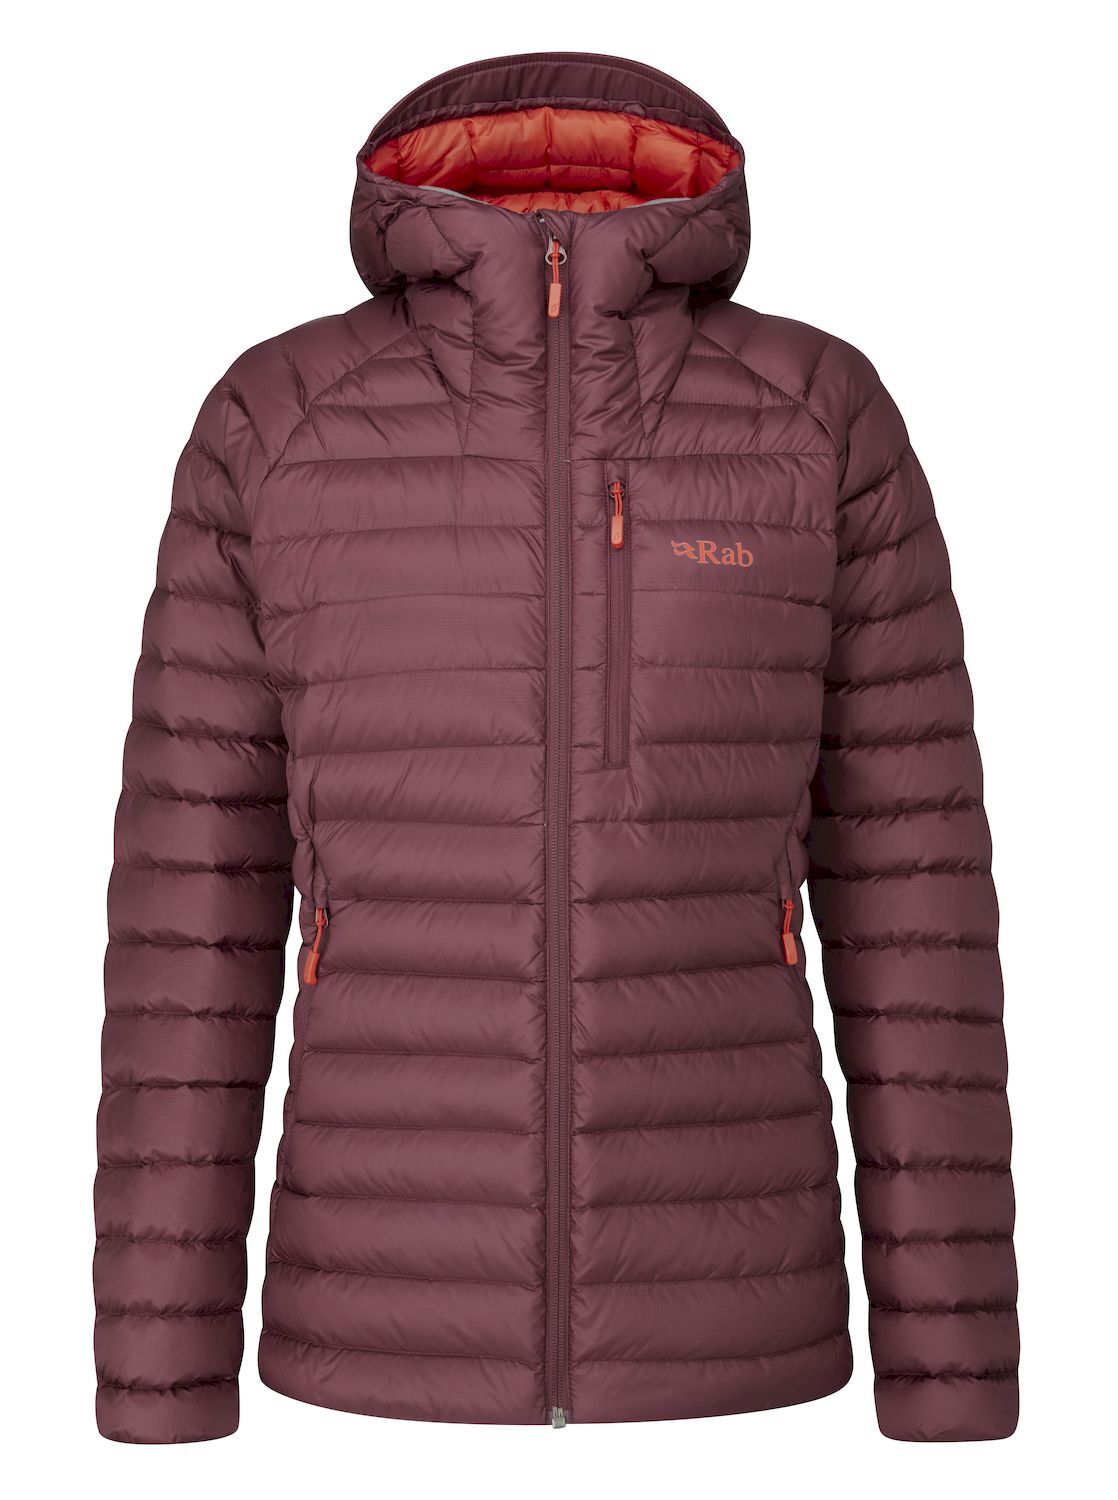 Rab Microlight Alpine Long Jacket  - Giacca in piumino - Donna